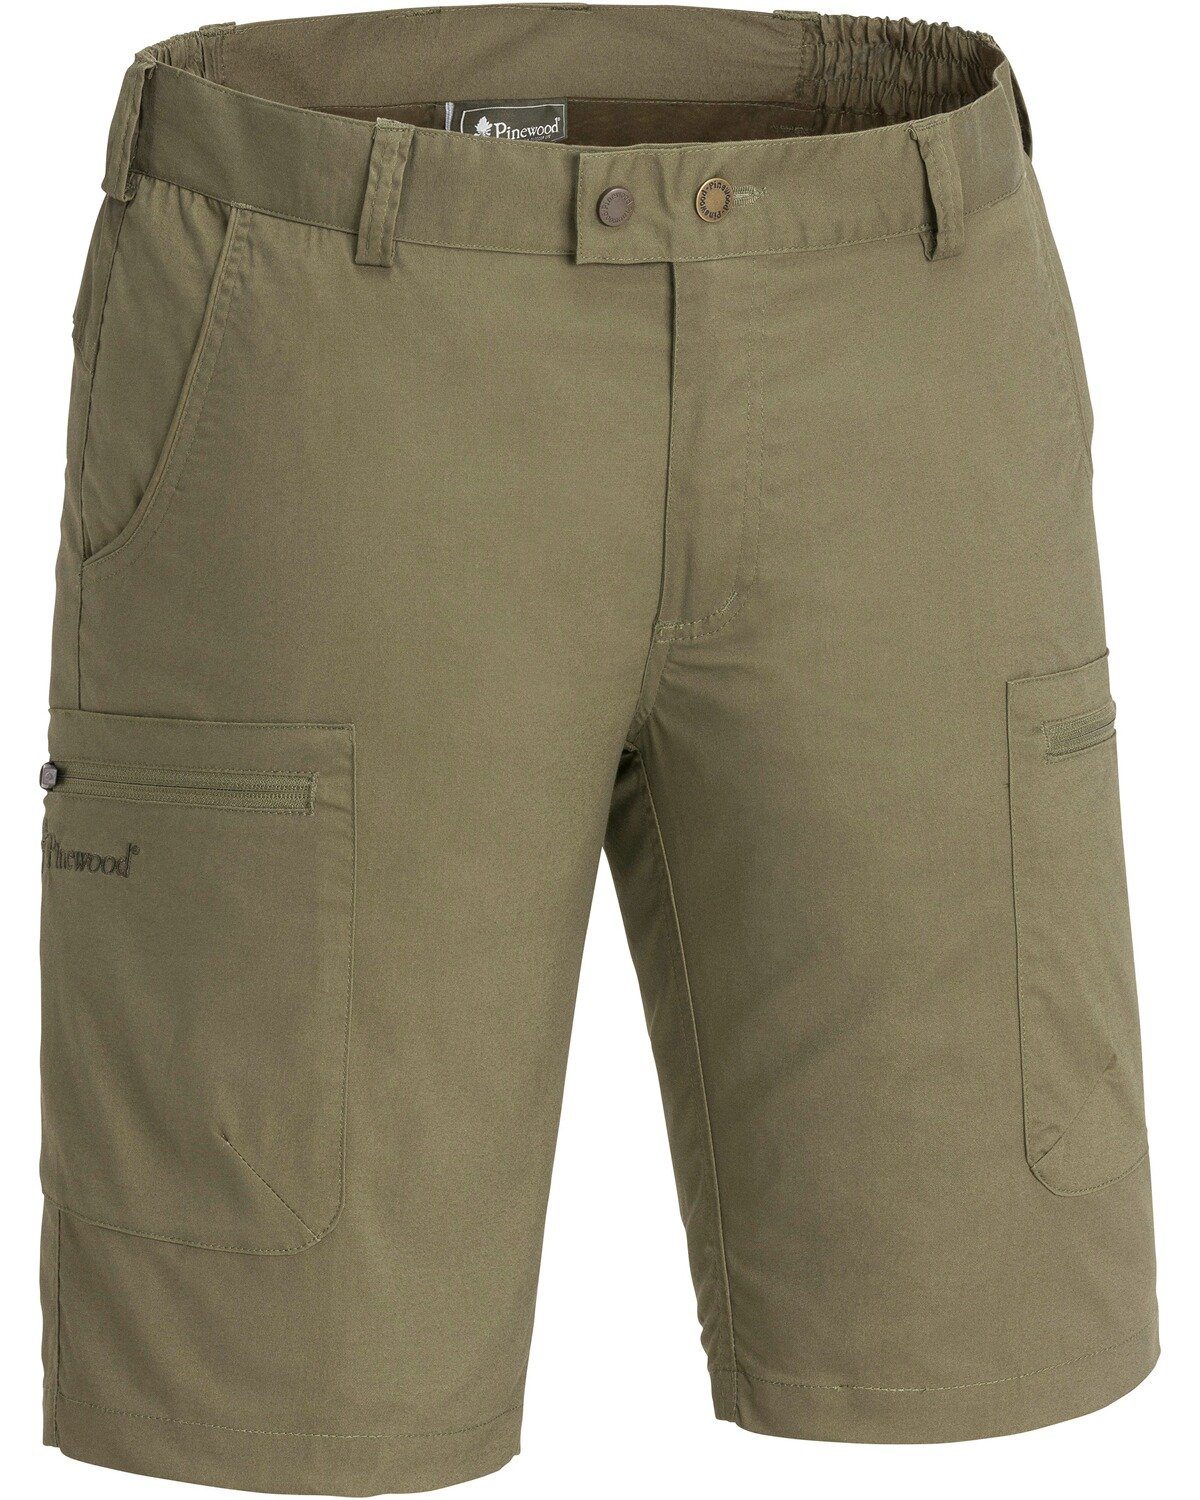 Tiveden TC-Stretch Pinewood Cargoshorts Shorts